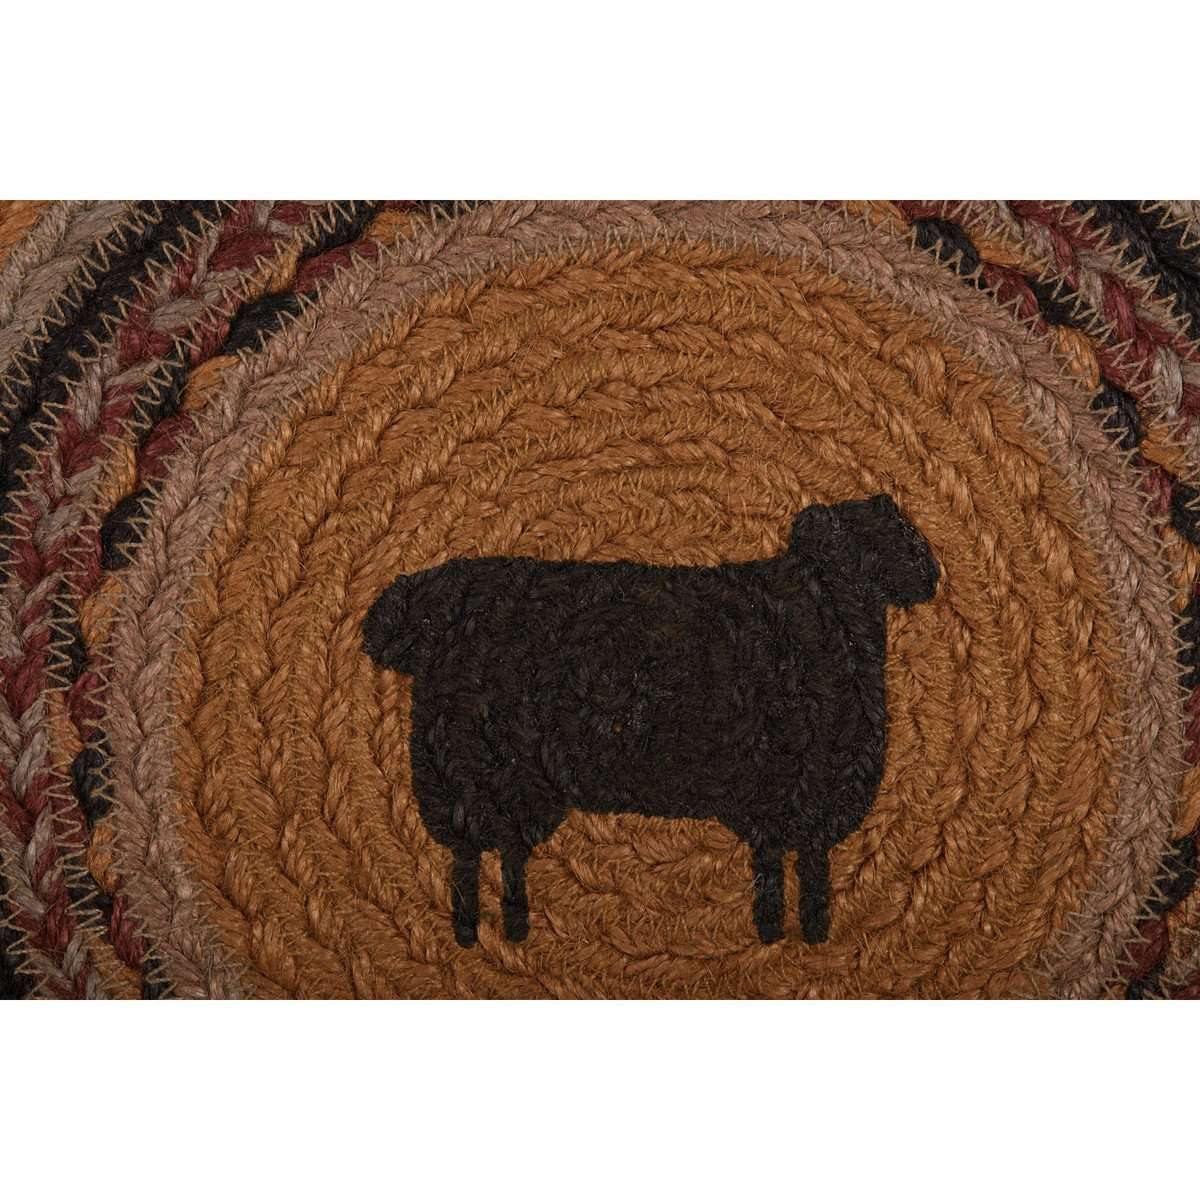 Heritage Farms Sheep Braided Jute Trivet 8" VHC Brands zoom